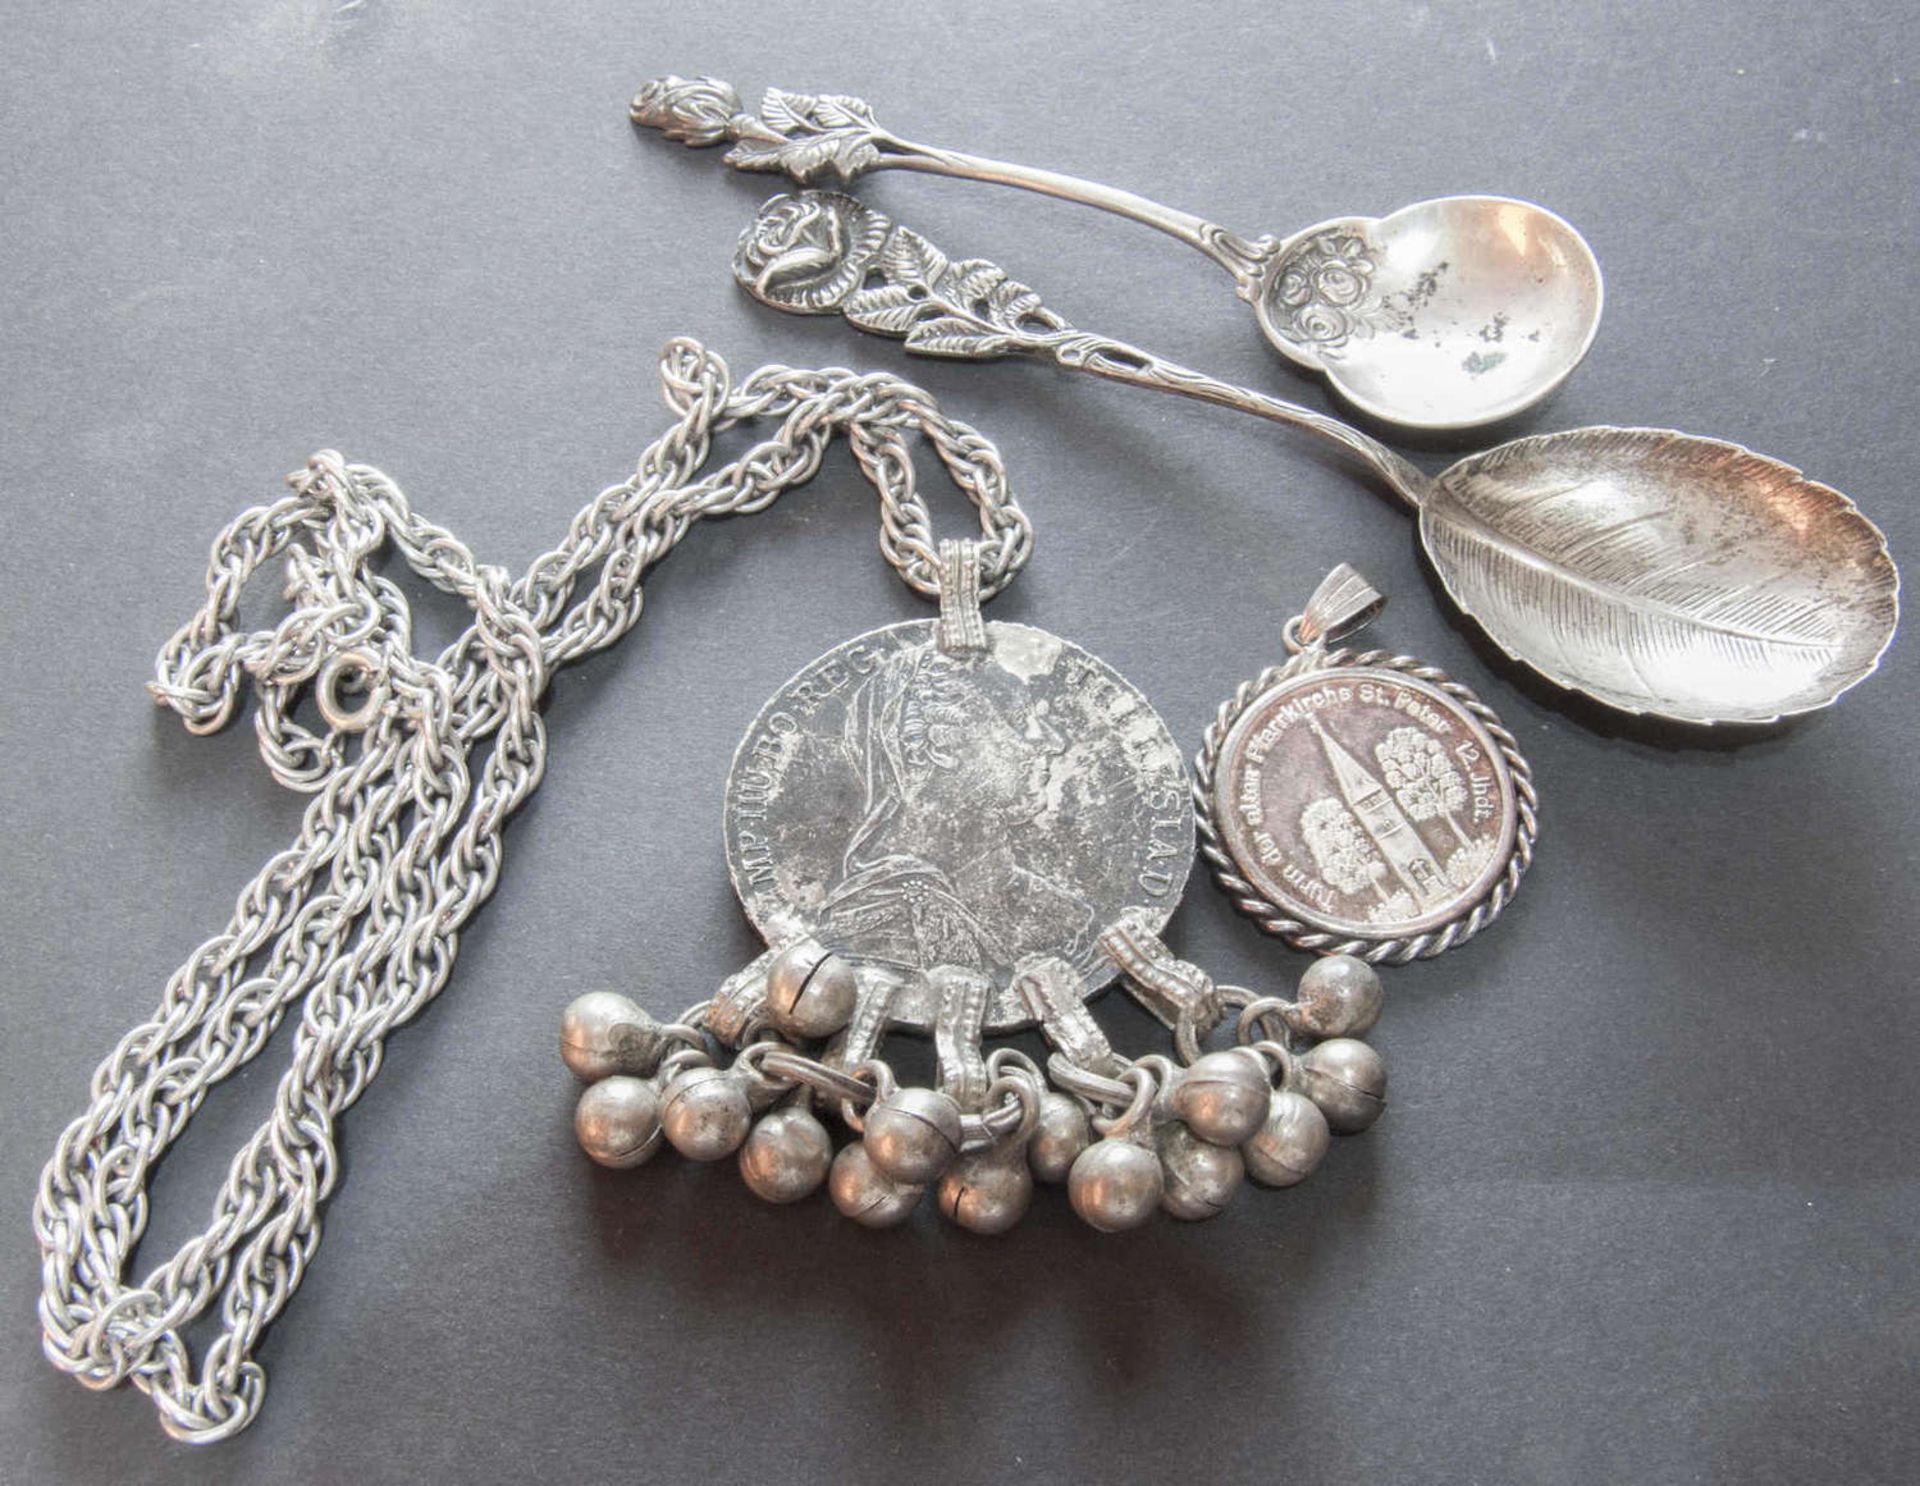 Silber - Konvolut, bestehend aus: gefassten Theresien - Taler an Silberkette, zwei Löffel "